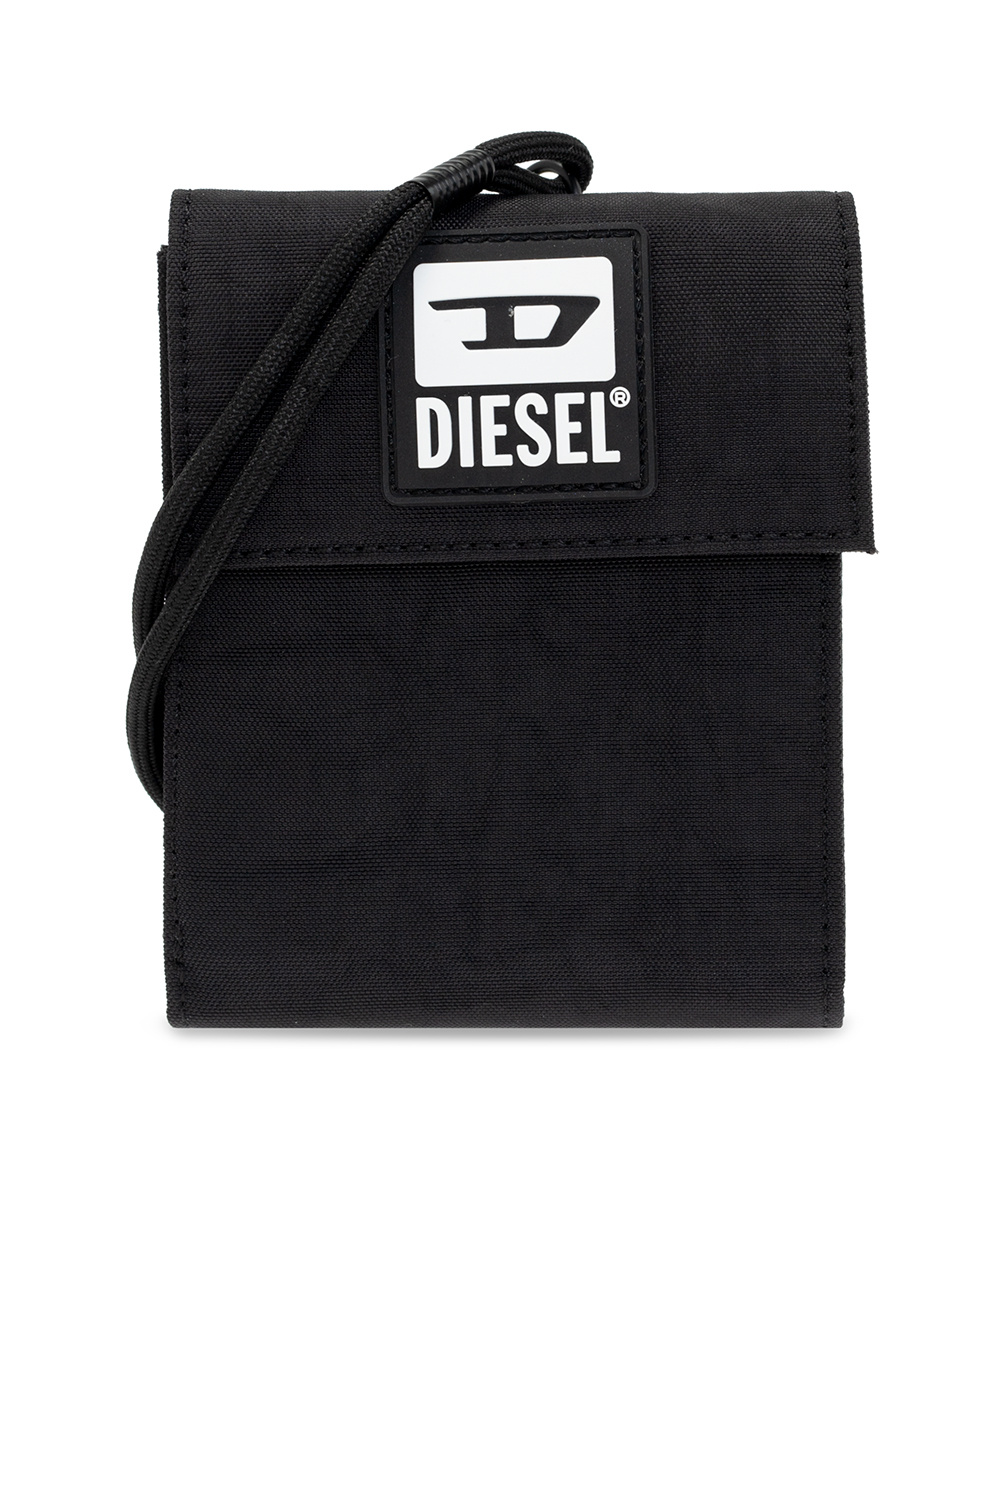 Diesel Wallet on cord strap